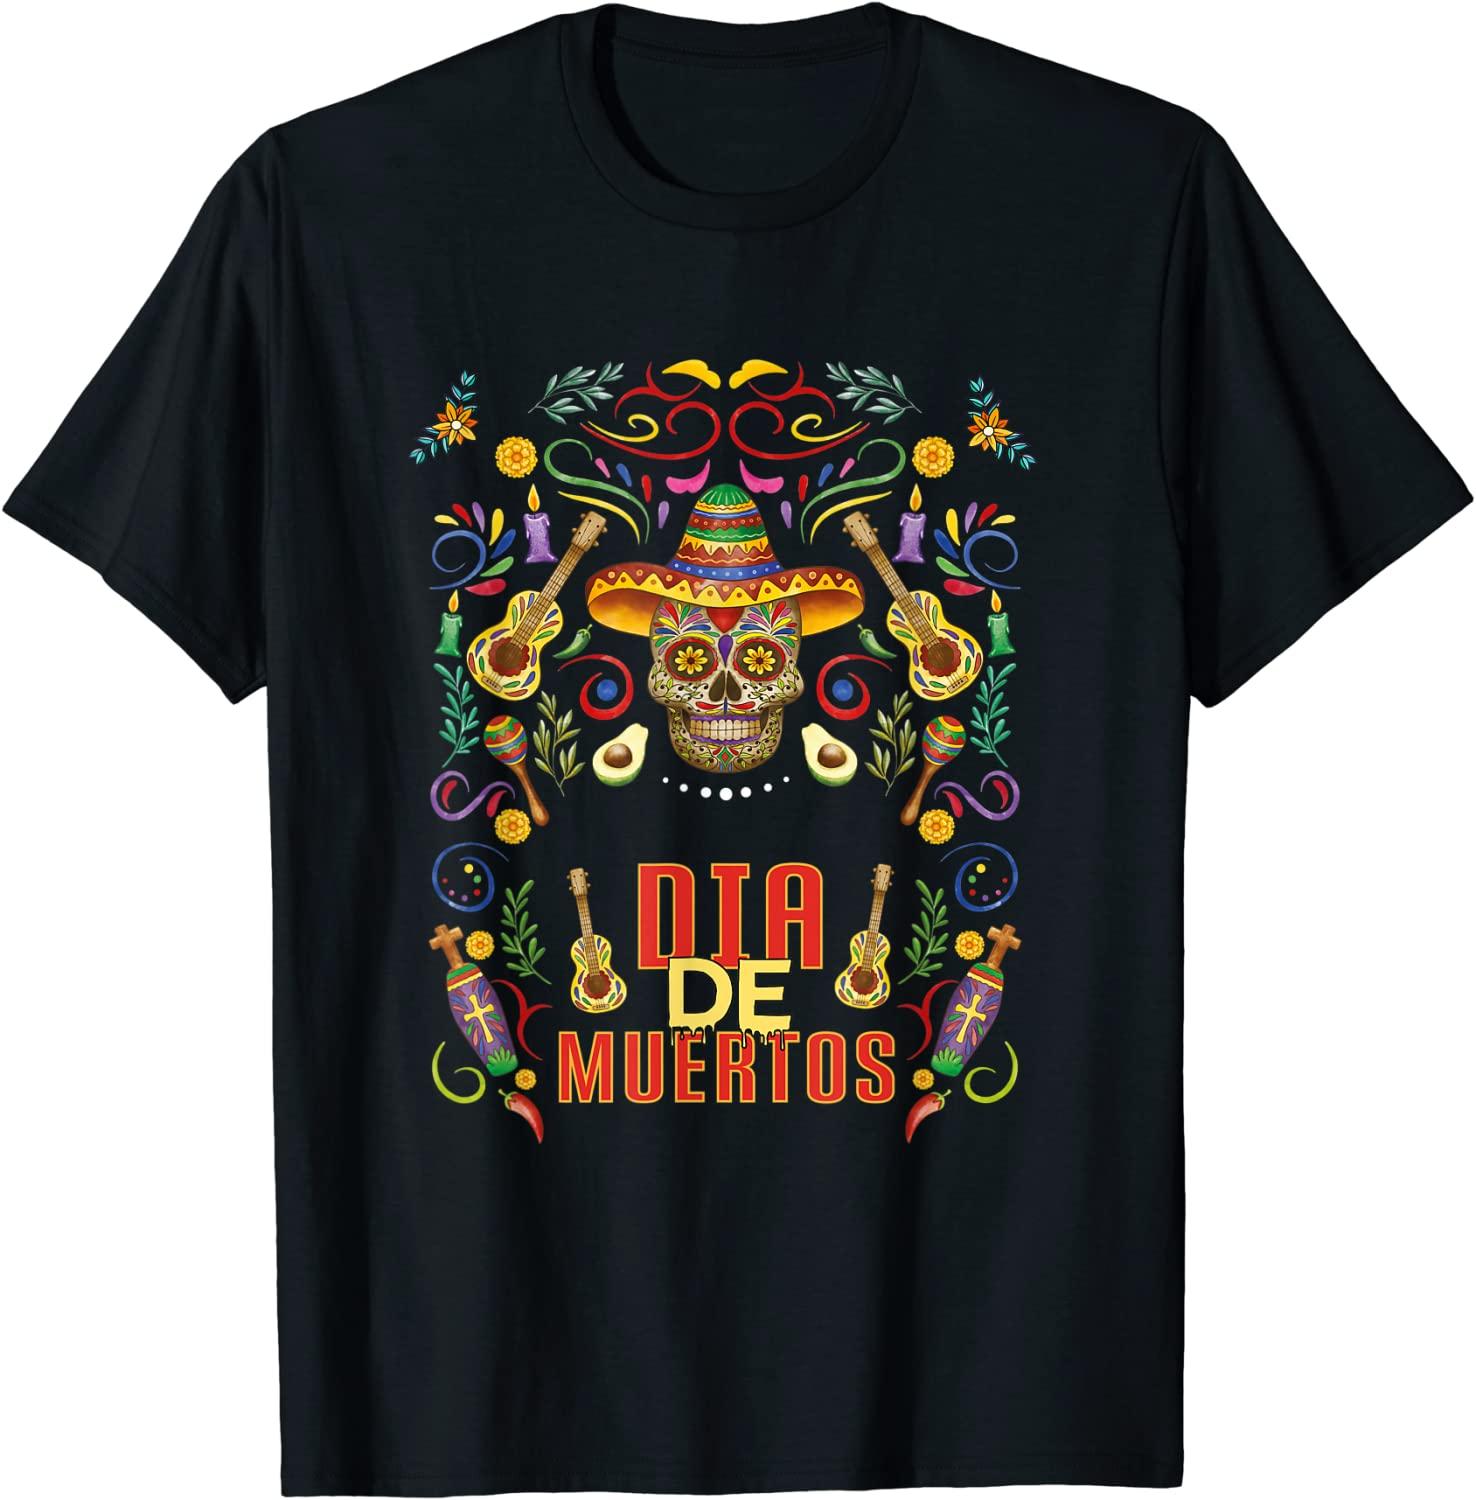 Dia De los Muertos Day of the Dead Mexican Skeleton Dancing T-Shirt Best Price